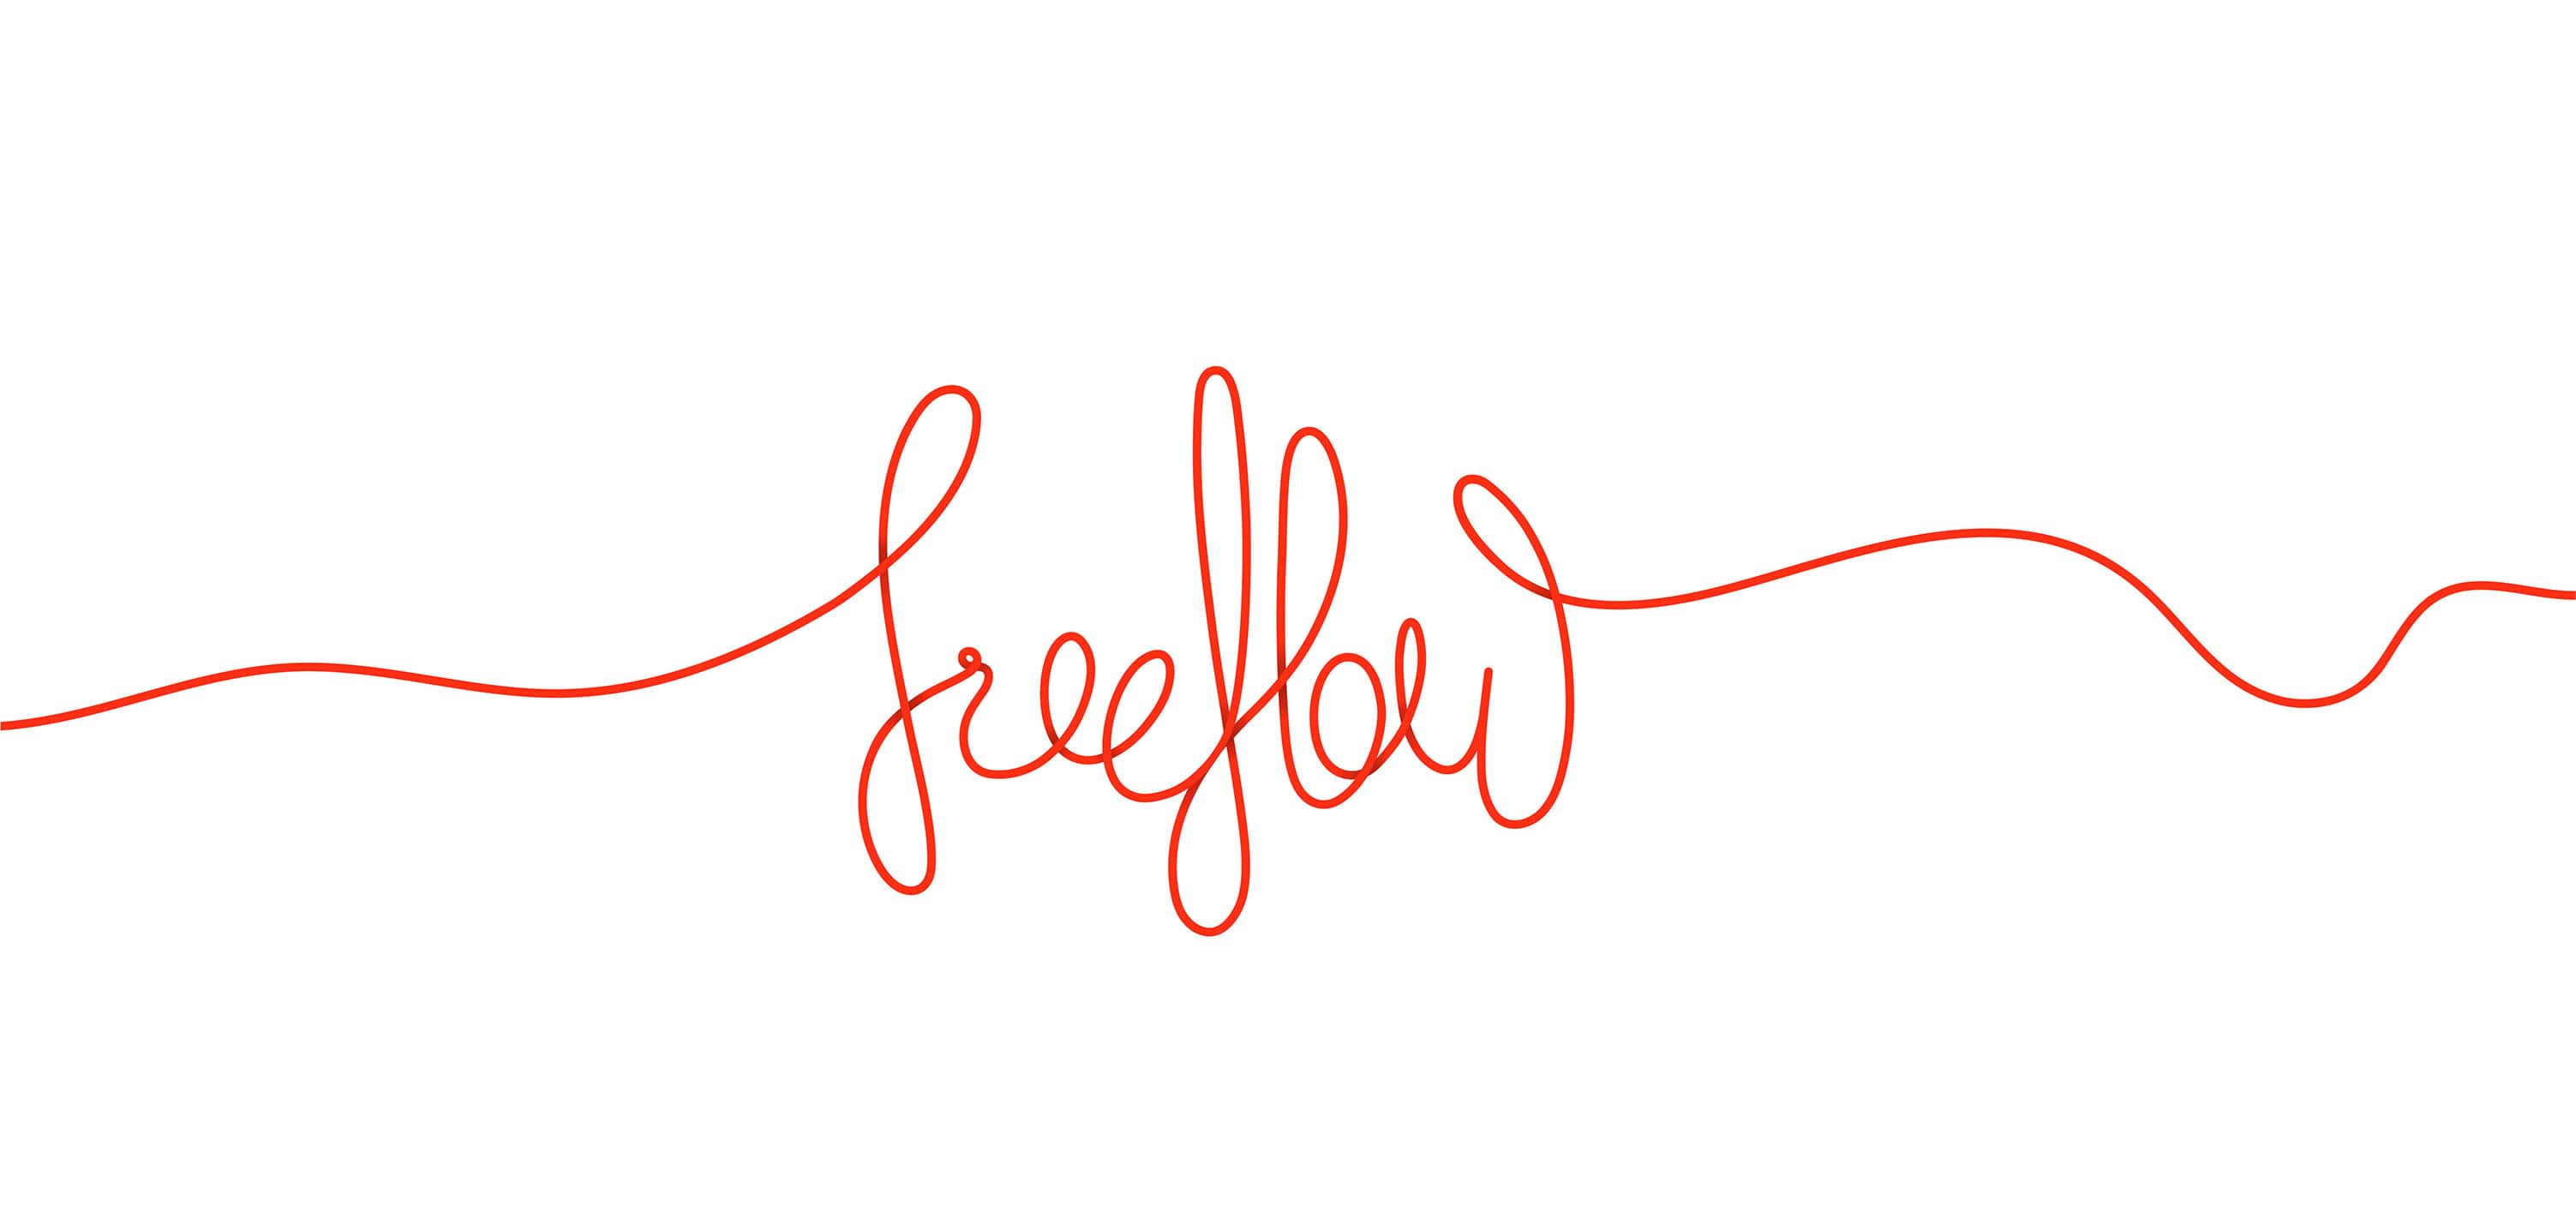 Freeflow ideas